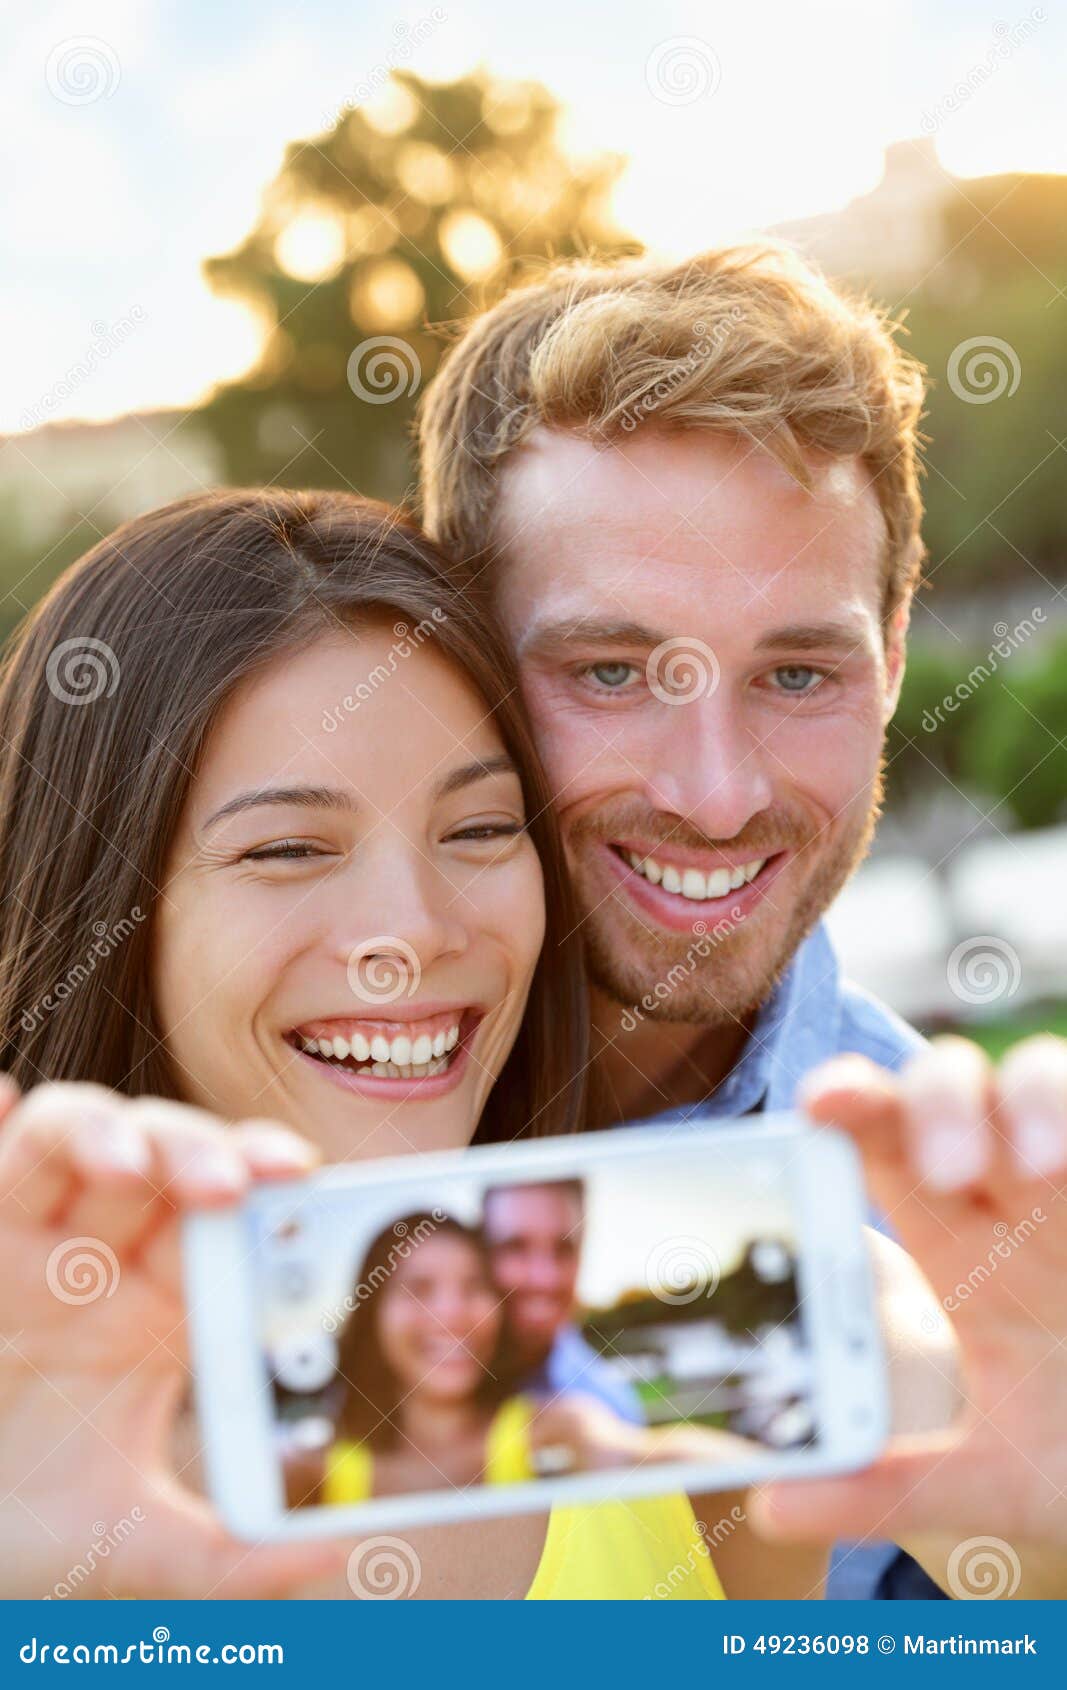 Cute Couple Selfie Ideas | How To Take Mirror Selfie | Pixomatic Blog